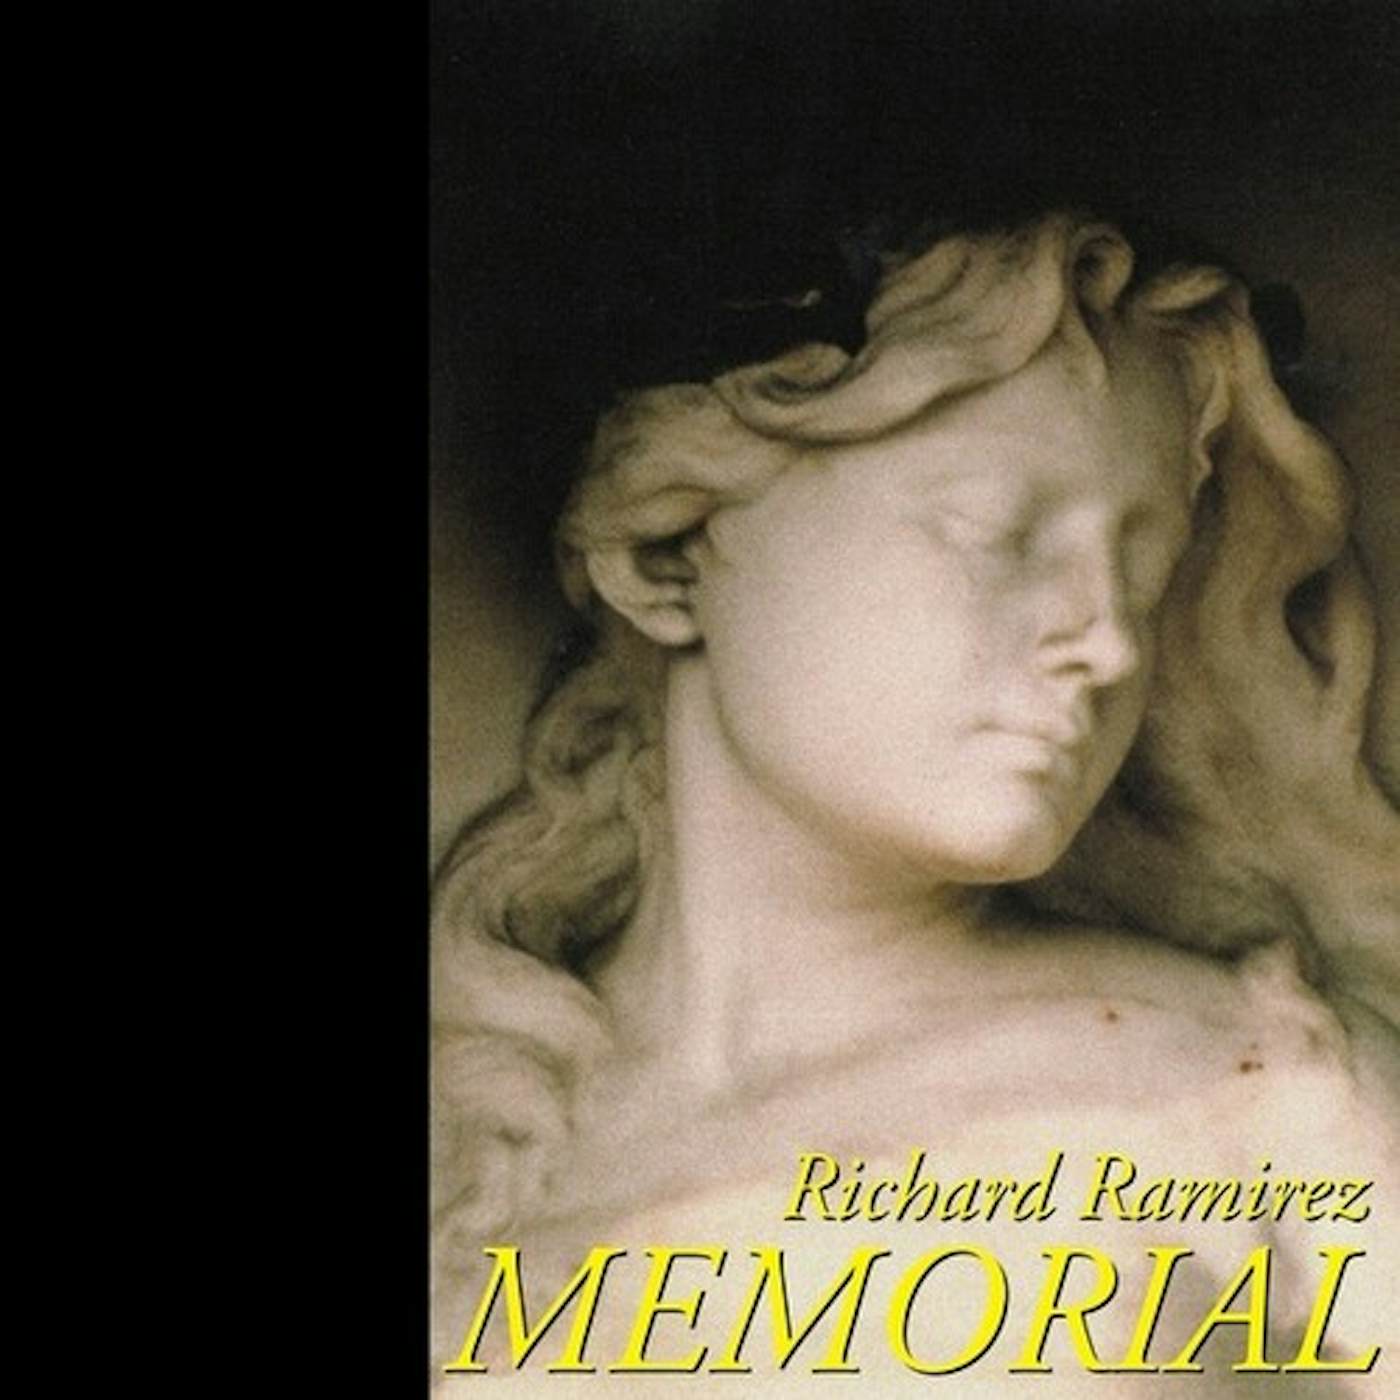 Richard Ramirez MEMORIAL Vinyl Record